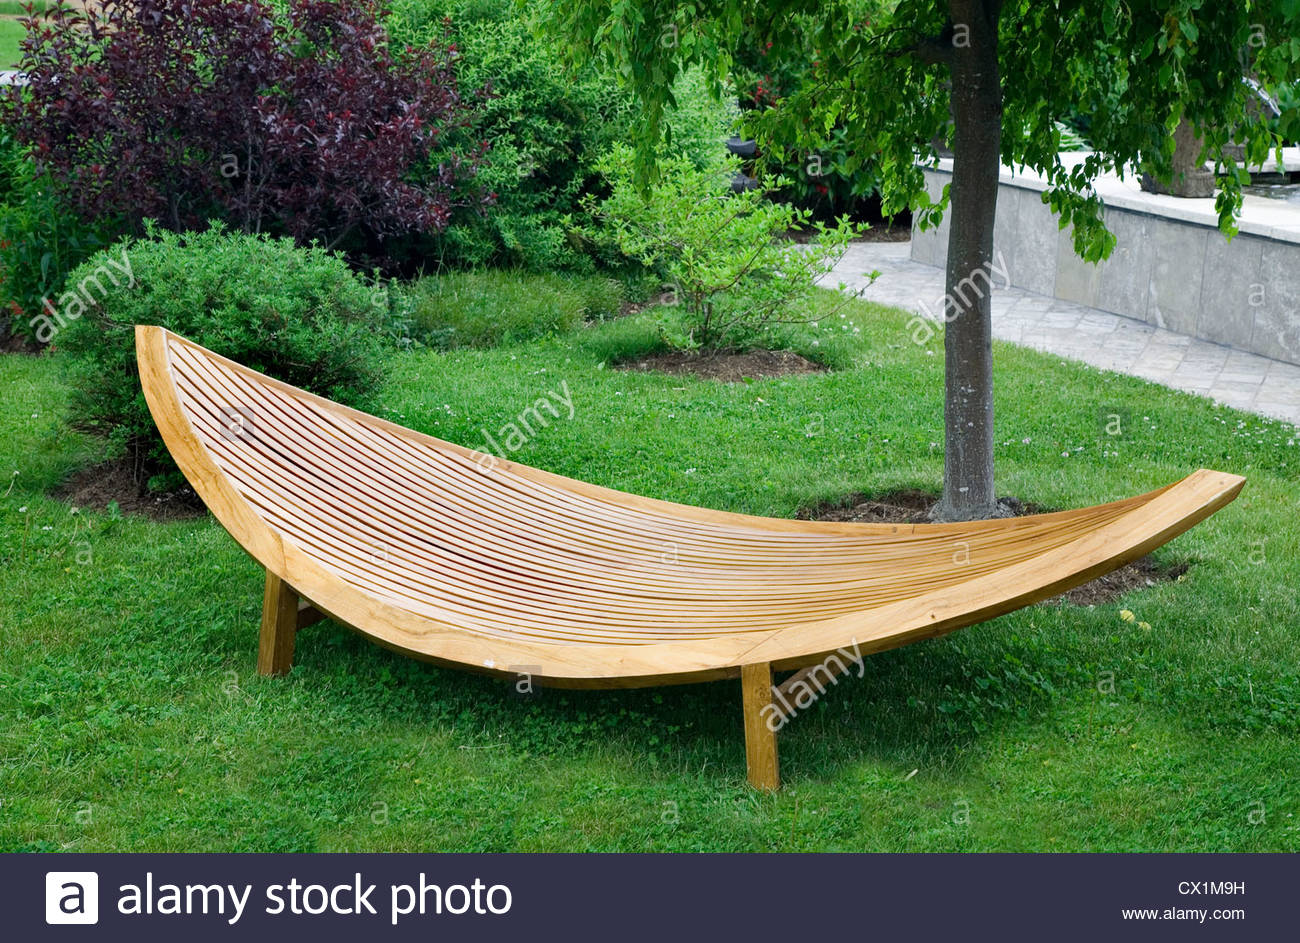 Sleek modern garden furniture made of wood and varnished. - Stock Image